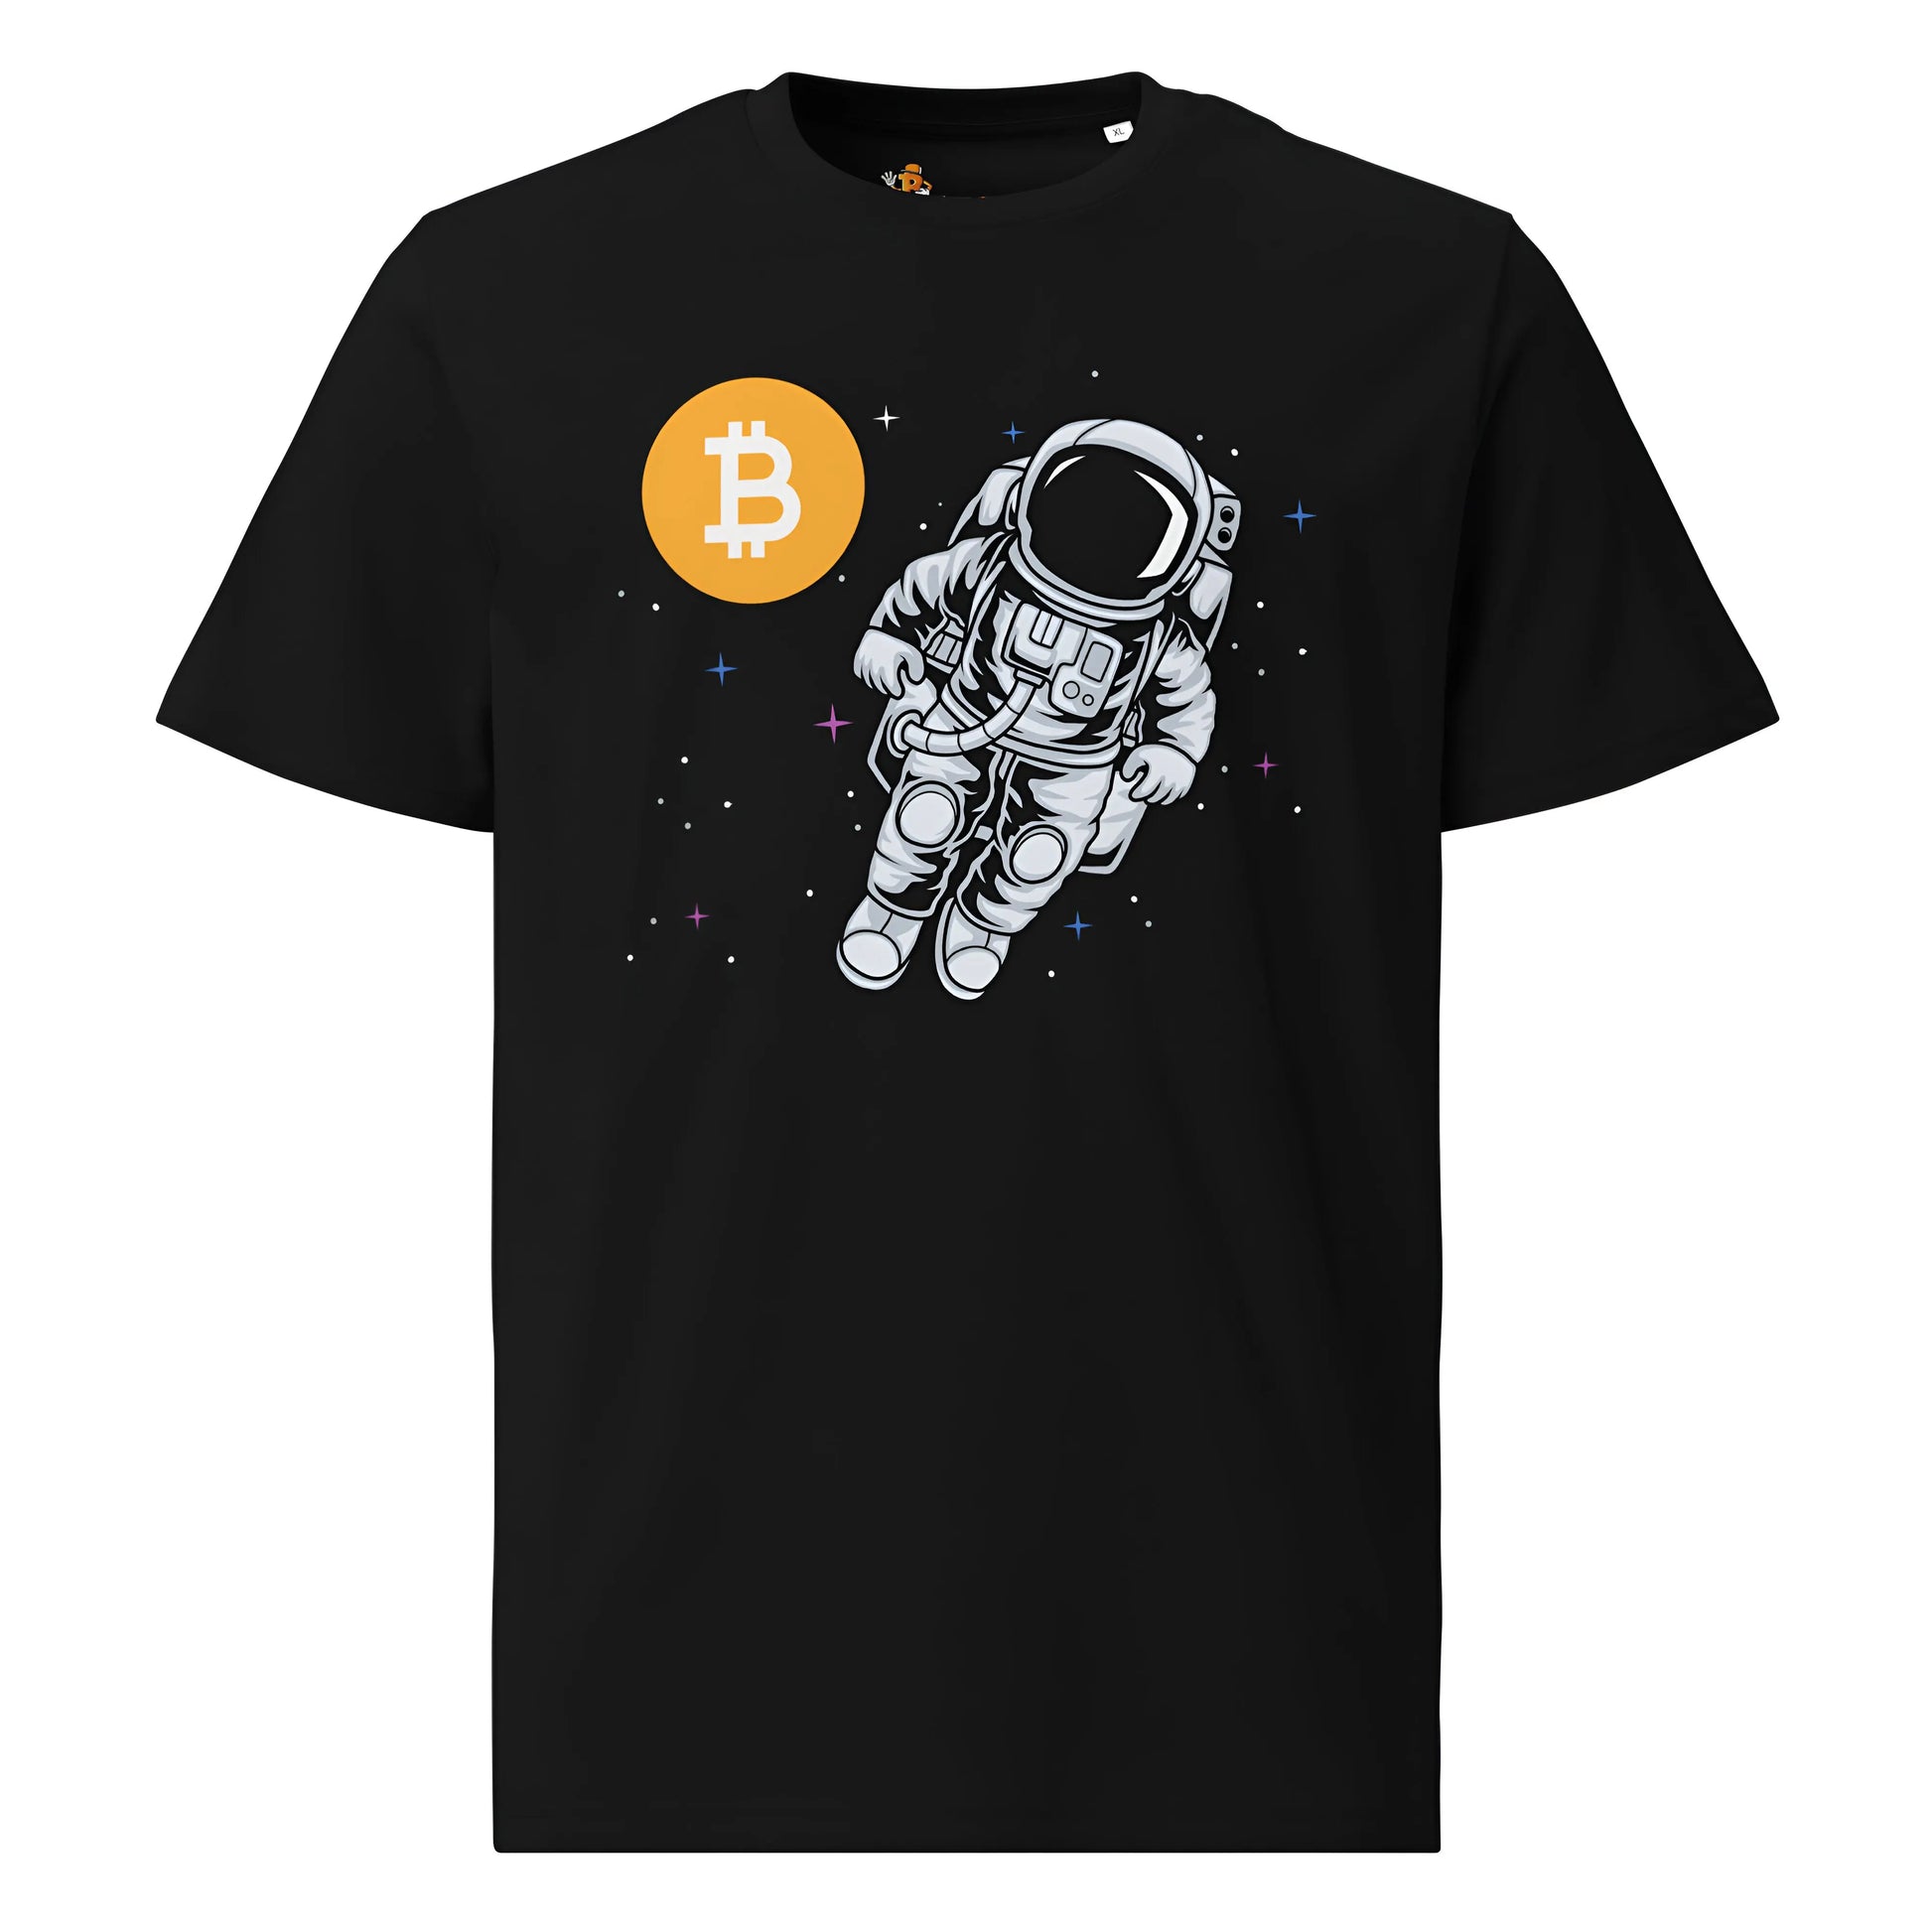 Bitcoin Moonwalk - Premium Unisex Organic Cotton Bitcoin T-shirt Black